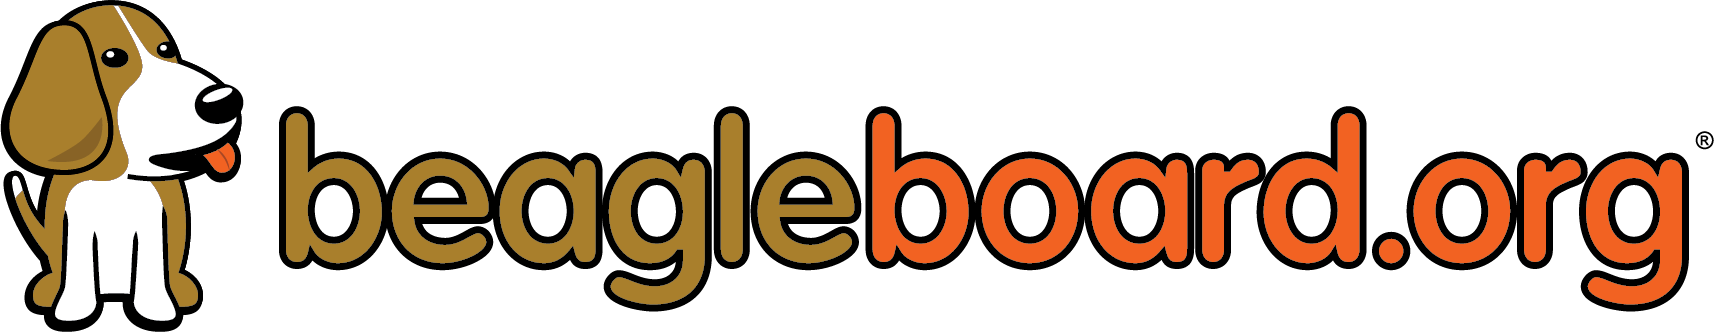 BeagleBoard logo